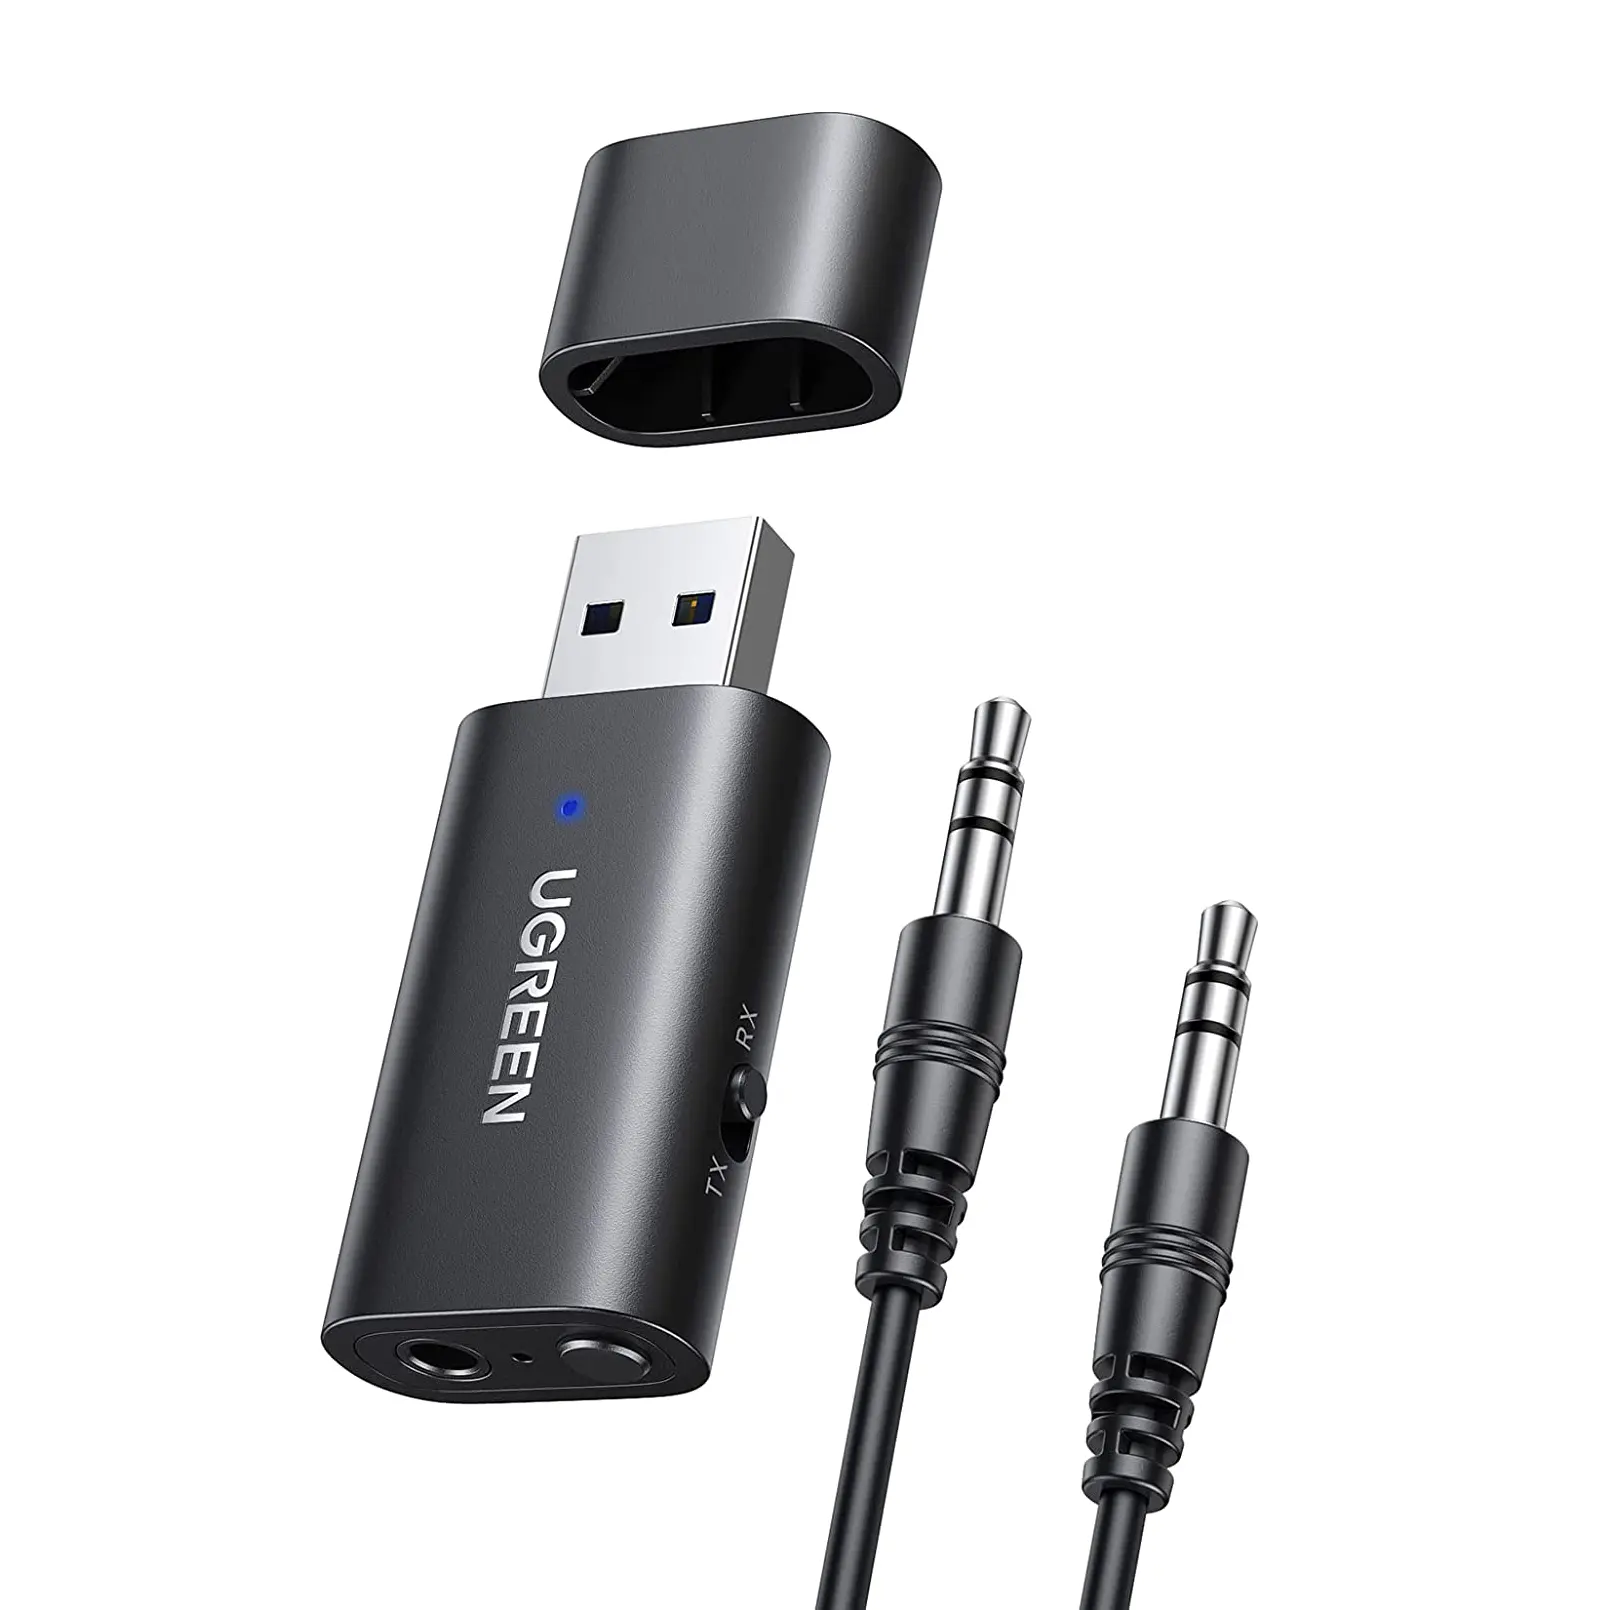 Rj45 Bluetooth 5.1 verici alıcı 2 in 1 kablosuz USB Bluetooth adaptörü dahili mikrofon 3.5mm ses Bluetooth Dongle